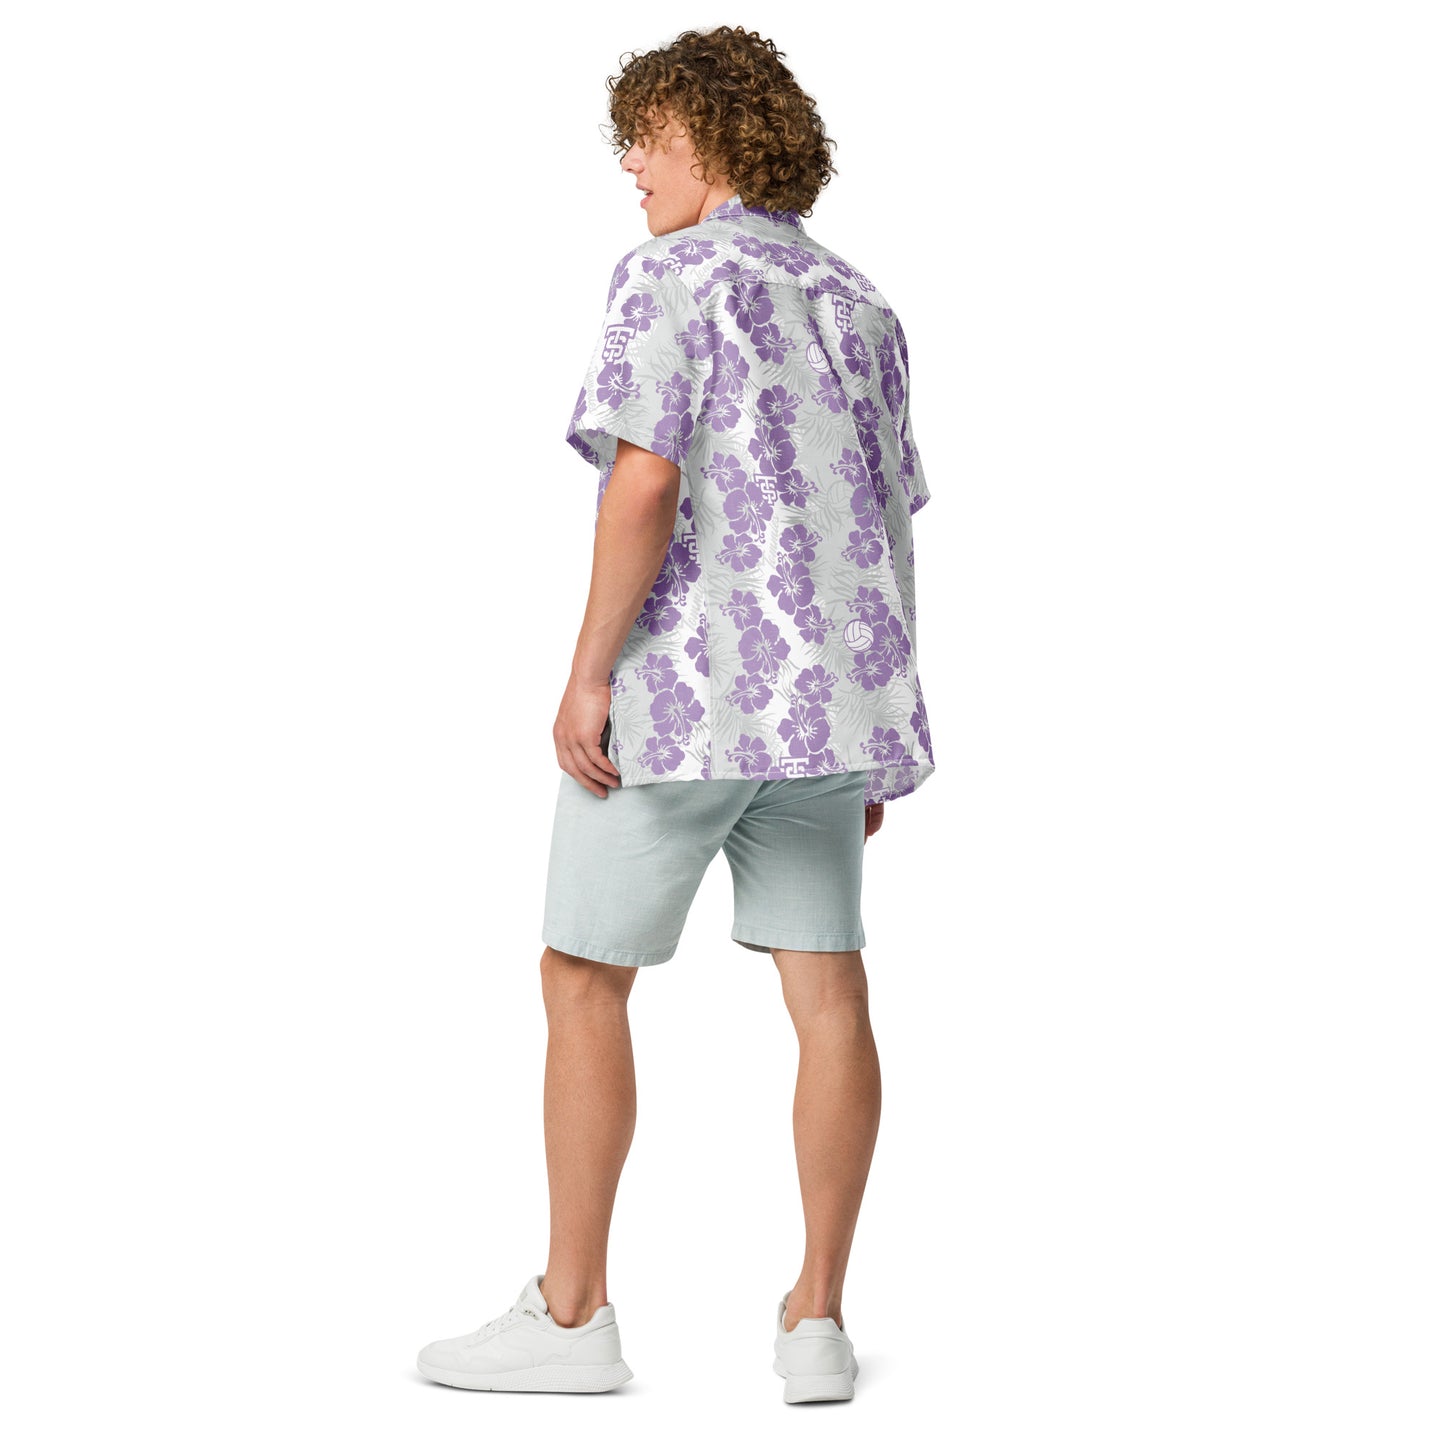 Tommies MVB Magnum PI Aloha Shirt